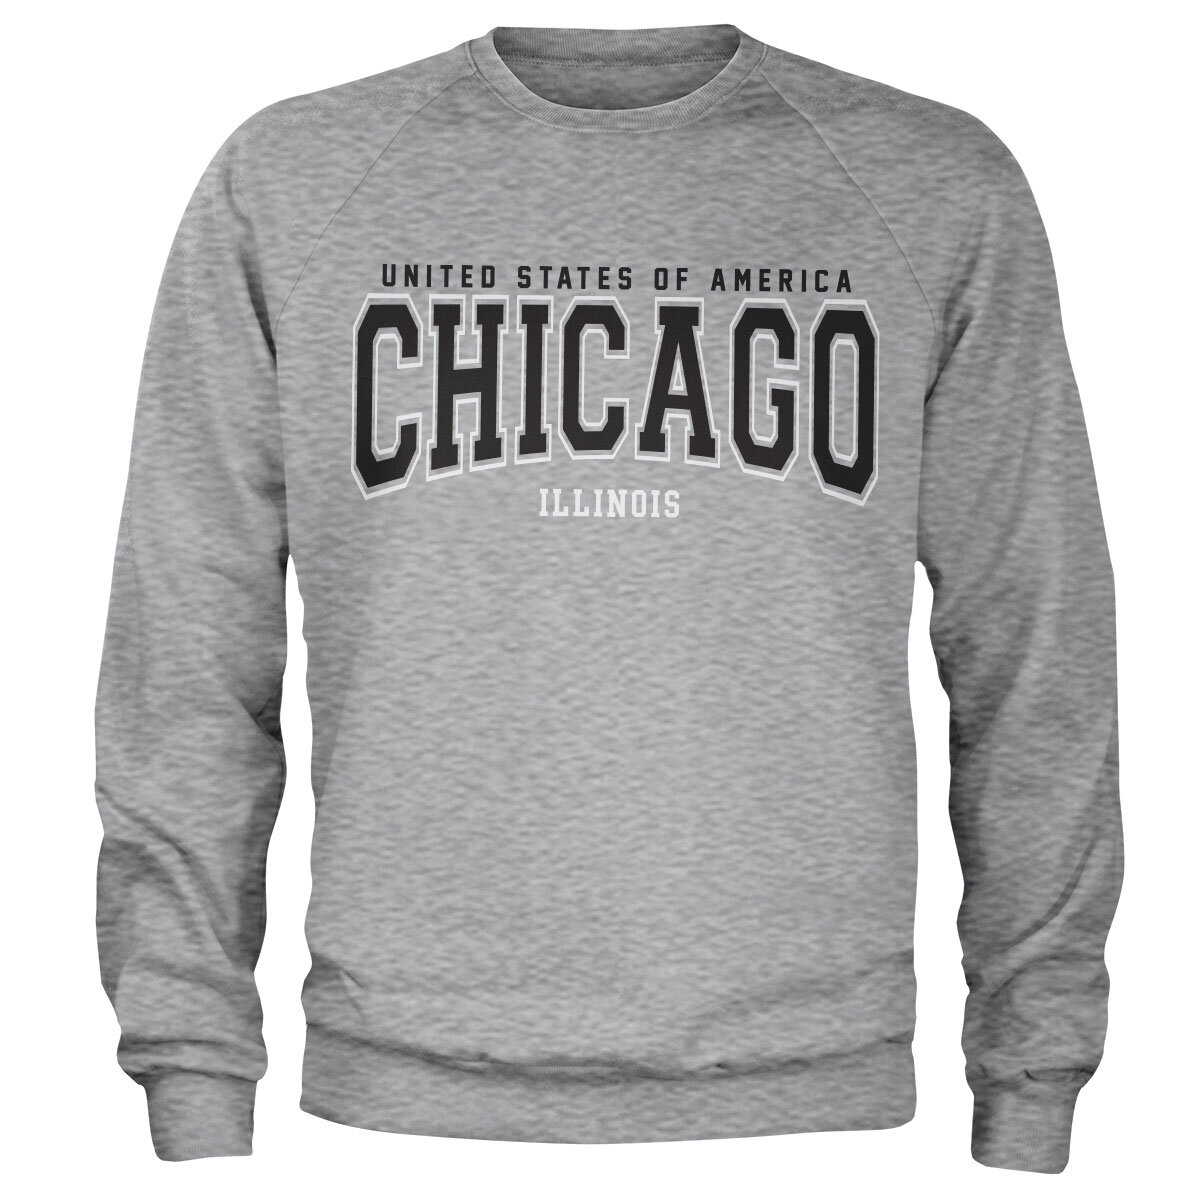 Chicago - Illinois Sweatshirt